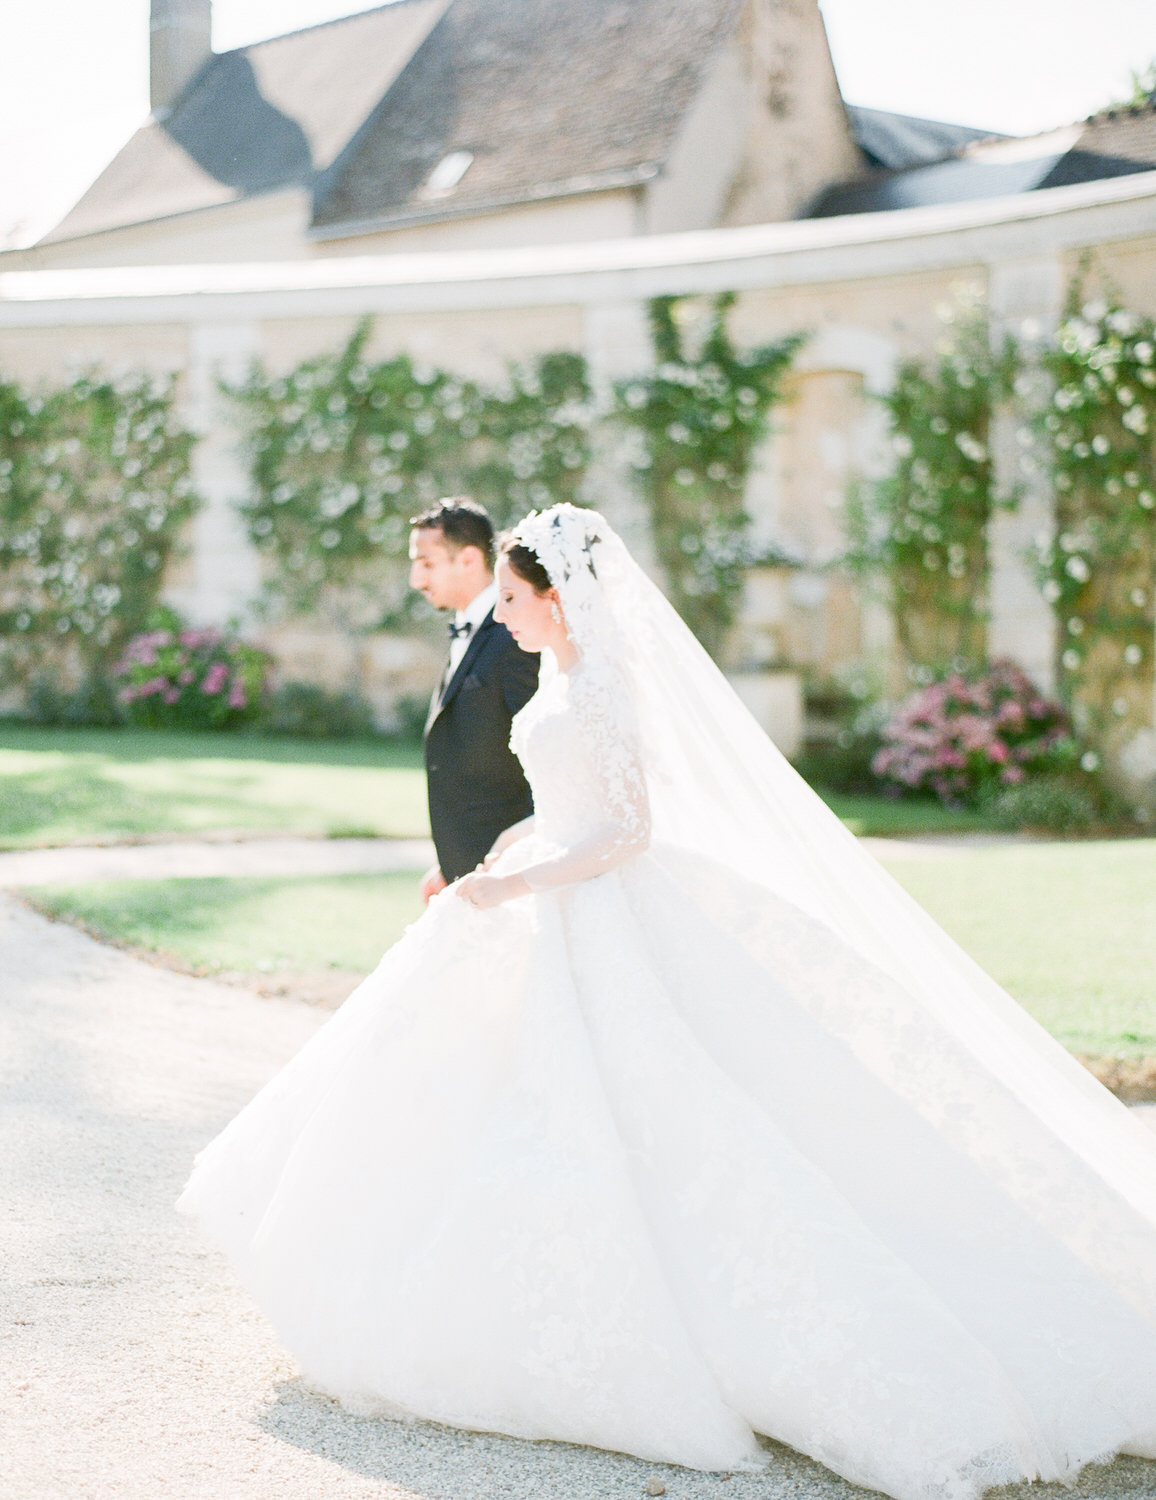 wedding-photography, wedding, destination-weddings - The French fairytale wedding Ben Yew captured